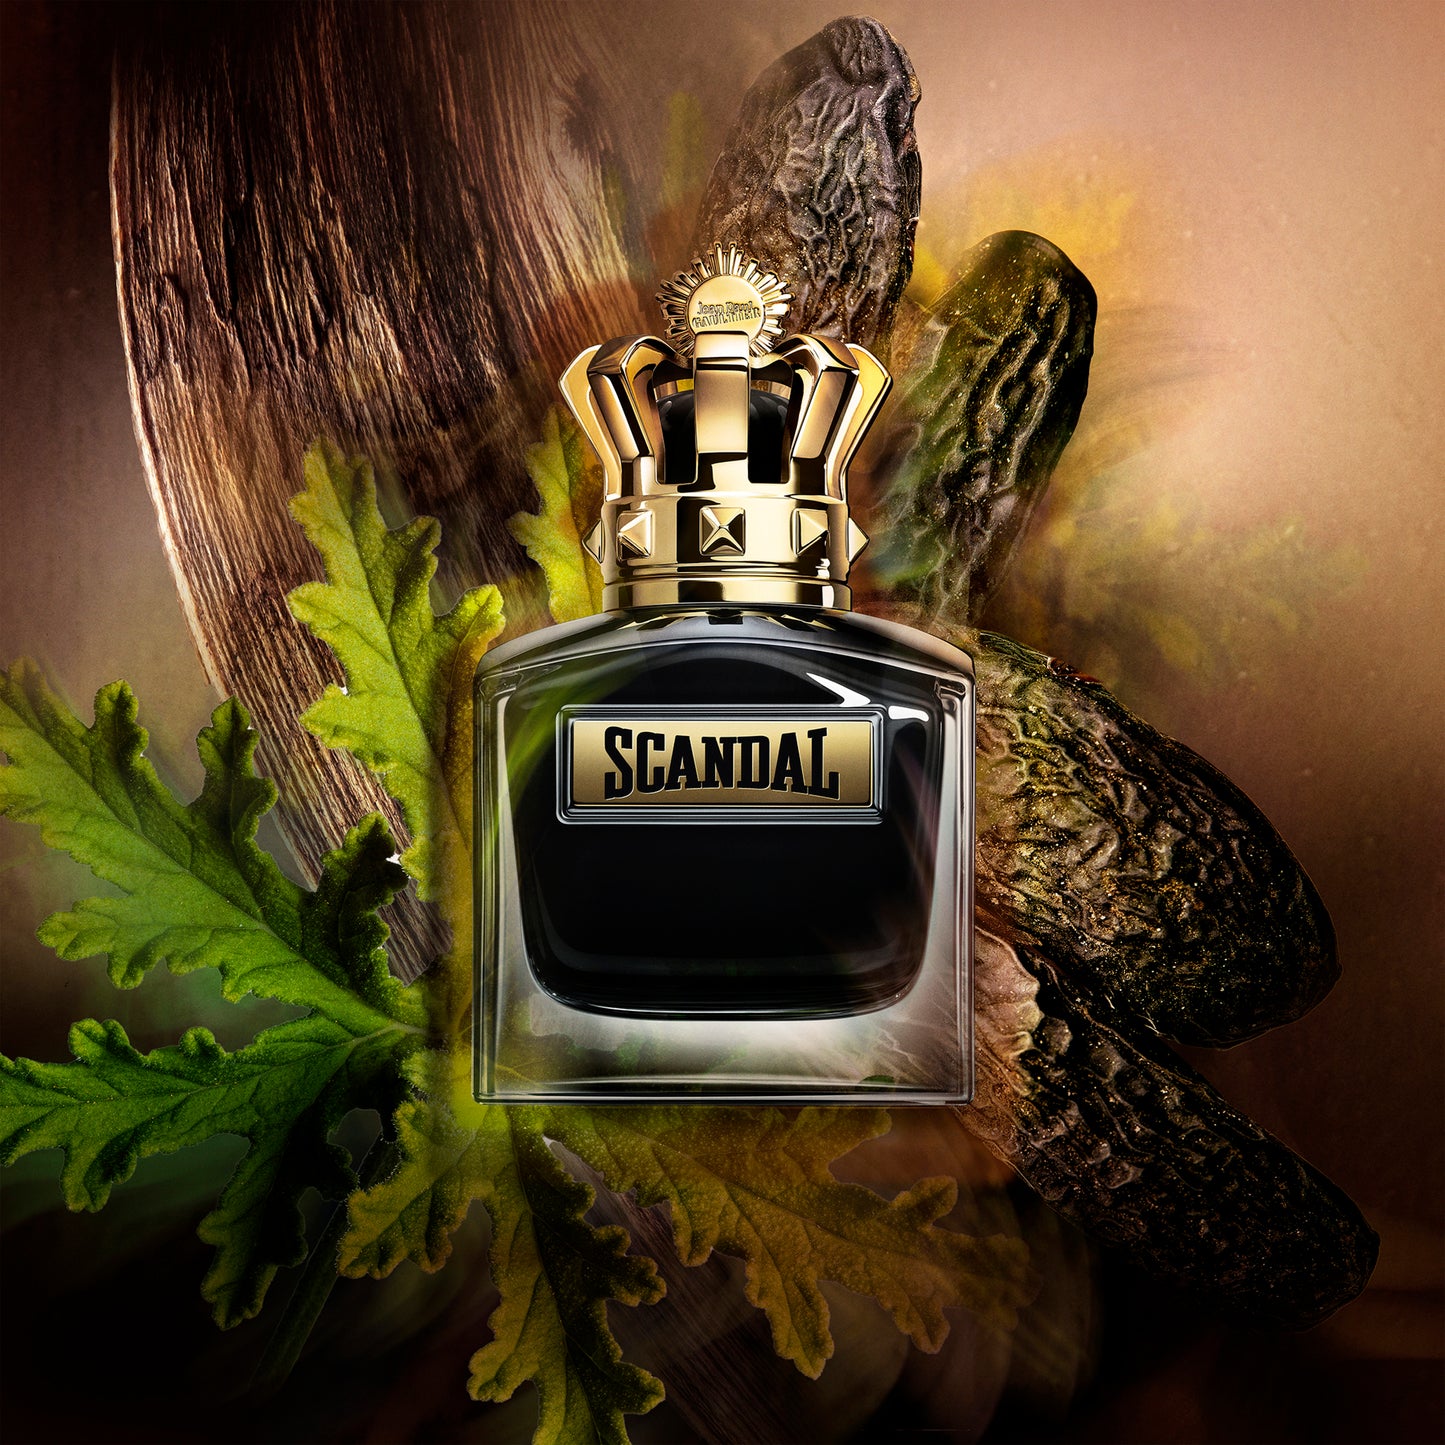 Scandal Le Parfum For Him Ricarica